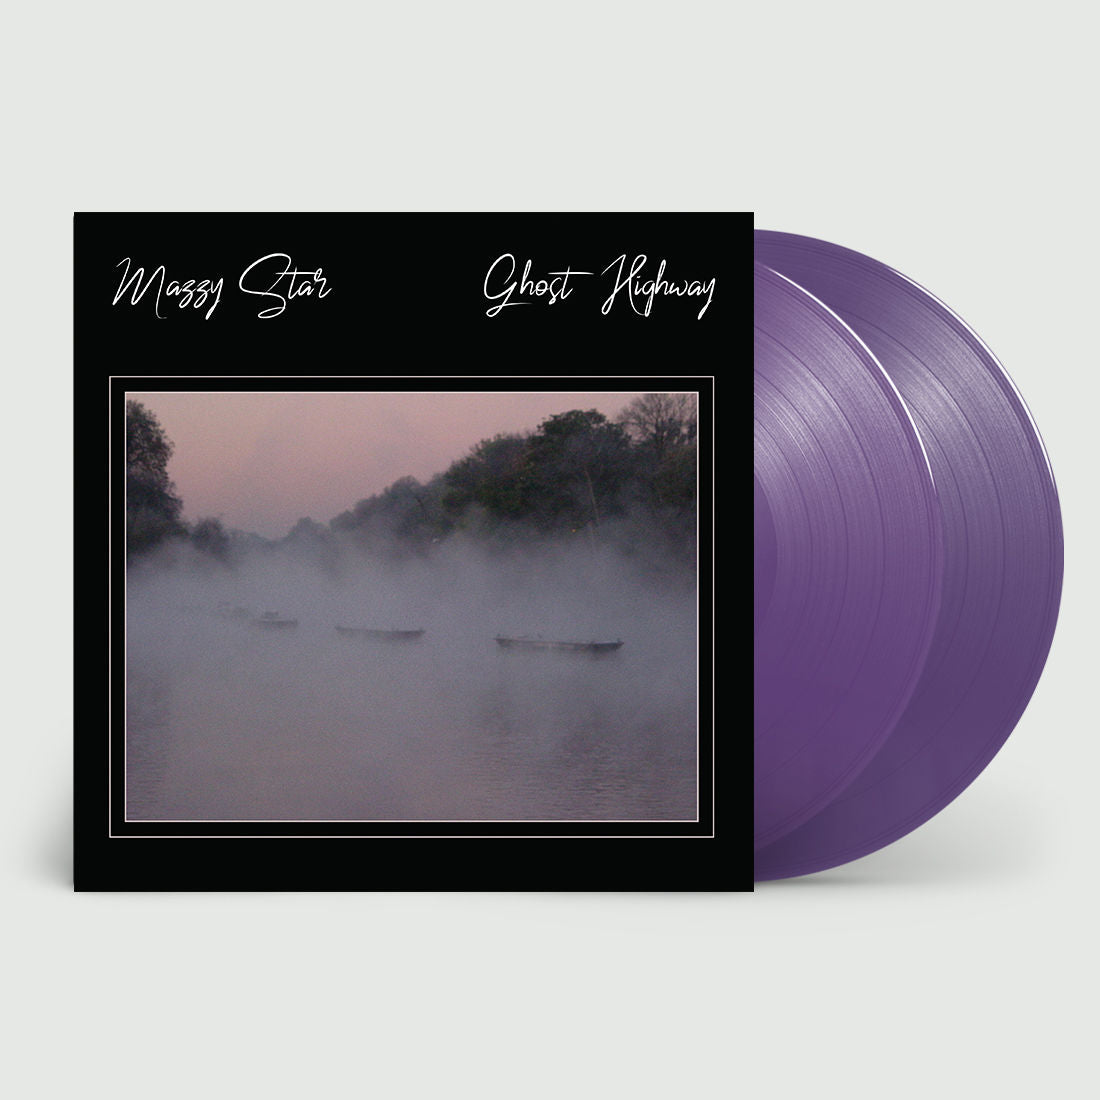 Mazzy Star - Ghost Highway: Limited Deluxe Purple Vinyl 2LP